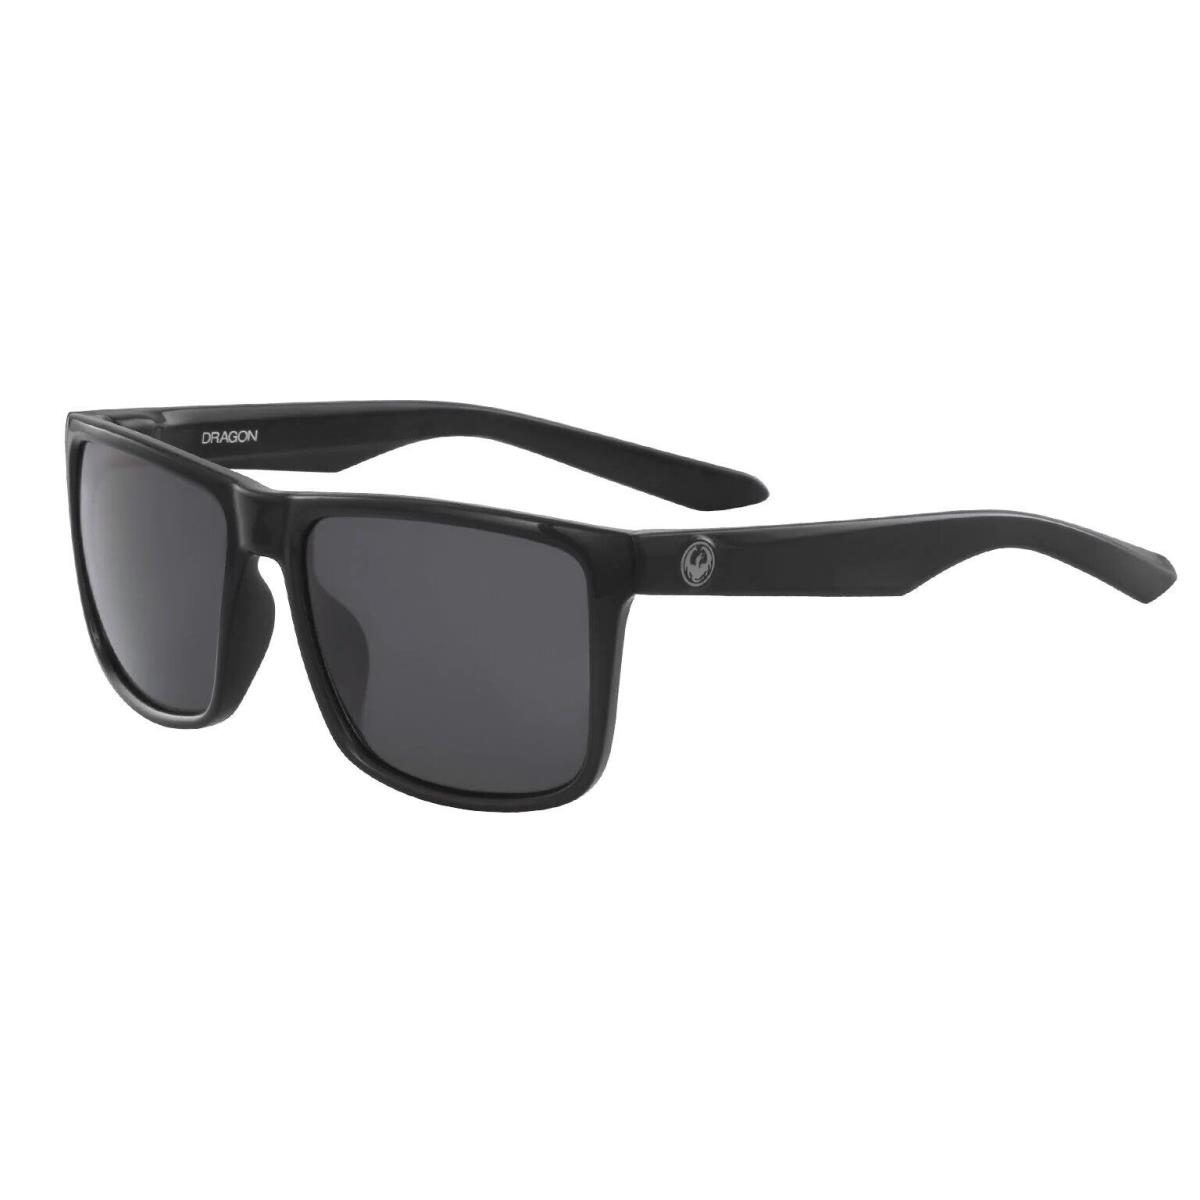 Dragon Meridien H2O Sunglasses - Black / Lumalens Smoke Polarized Lens - Frame: Black, Lens: Gray